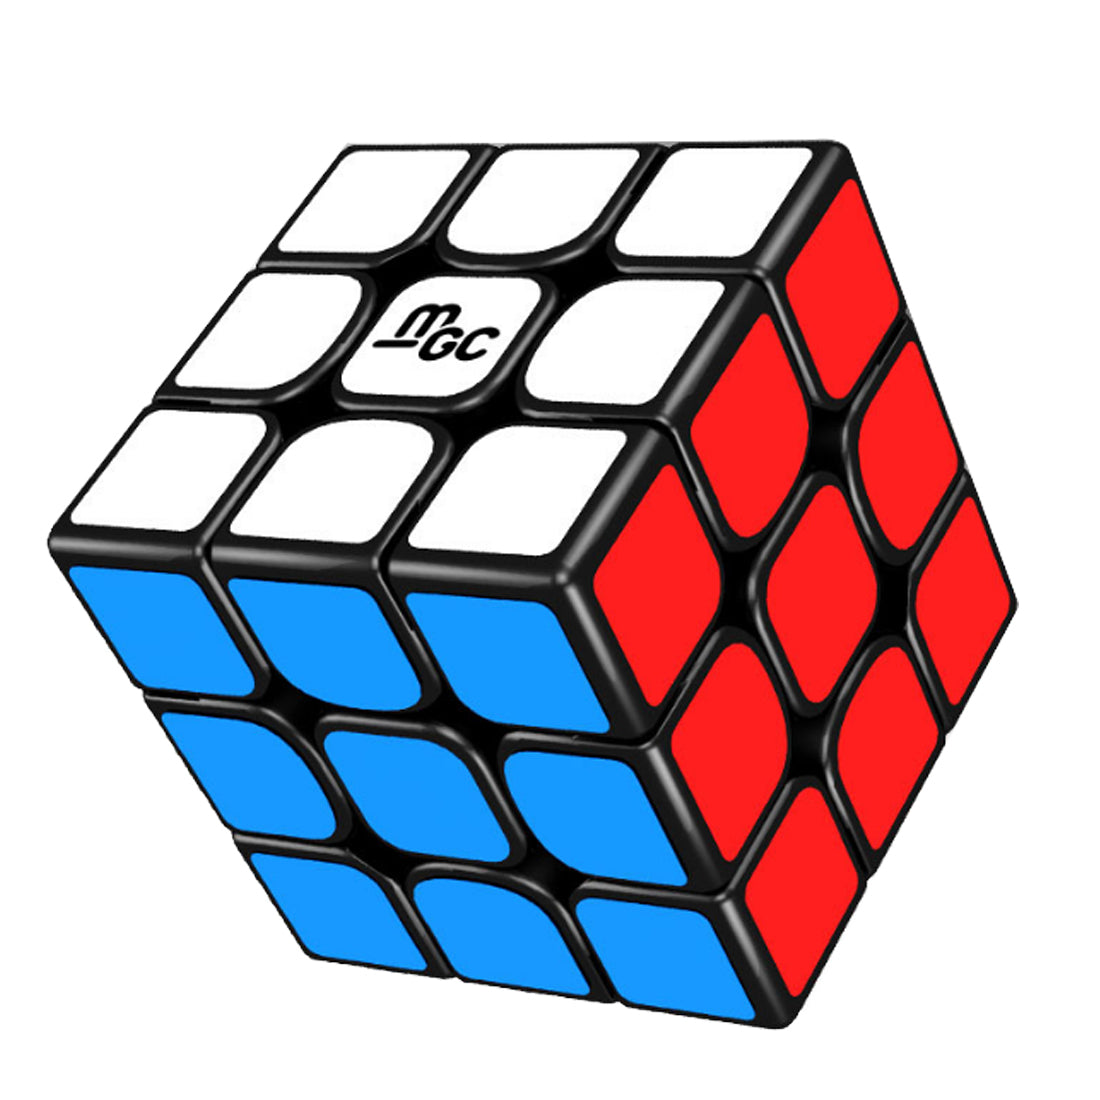 YJ MGC 3x3 - CuberSpace